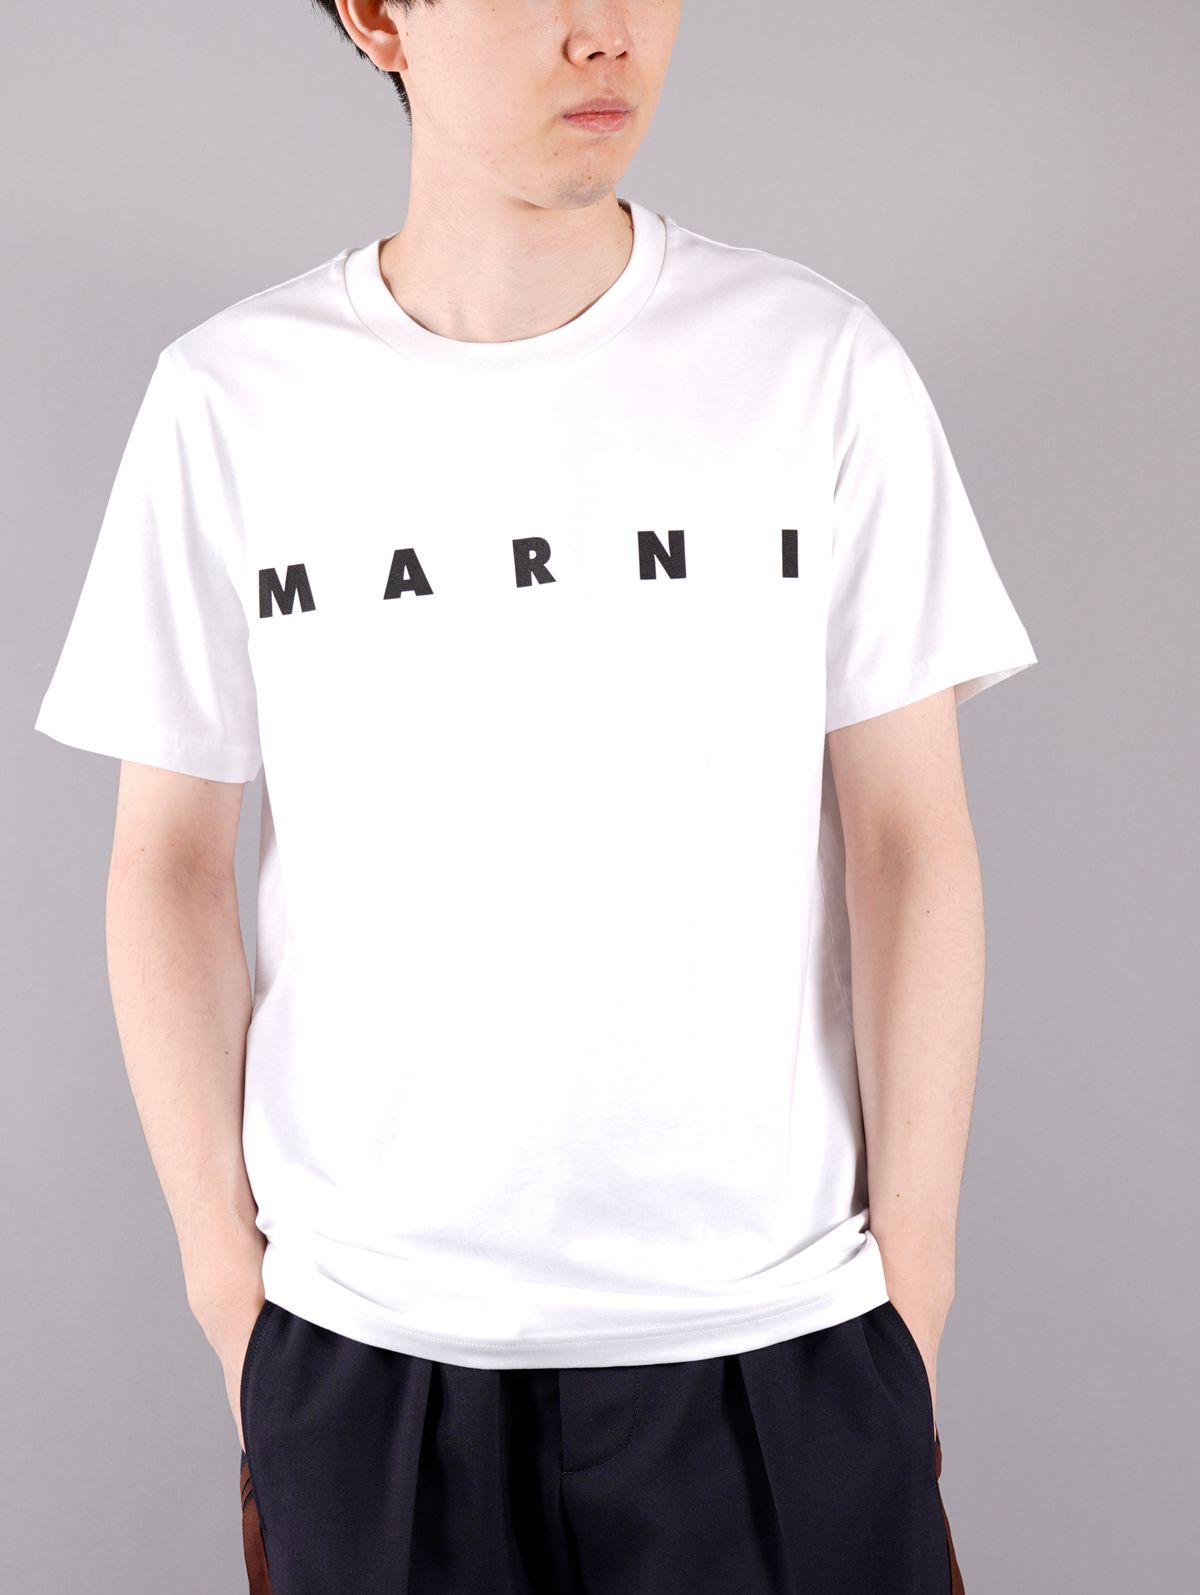 MARNI - マルニ / 21ss(Pre) | Confidence